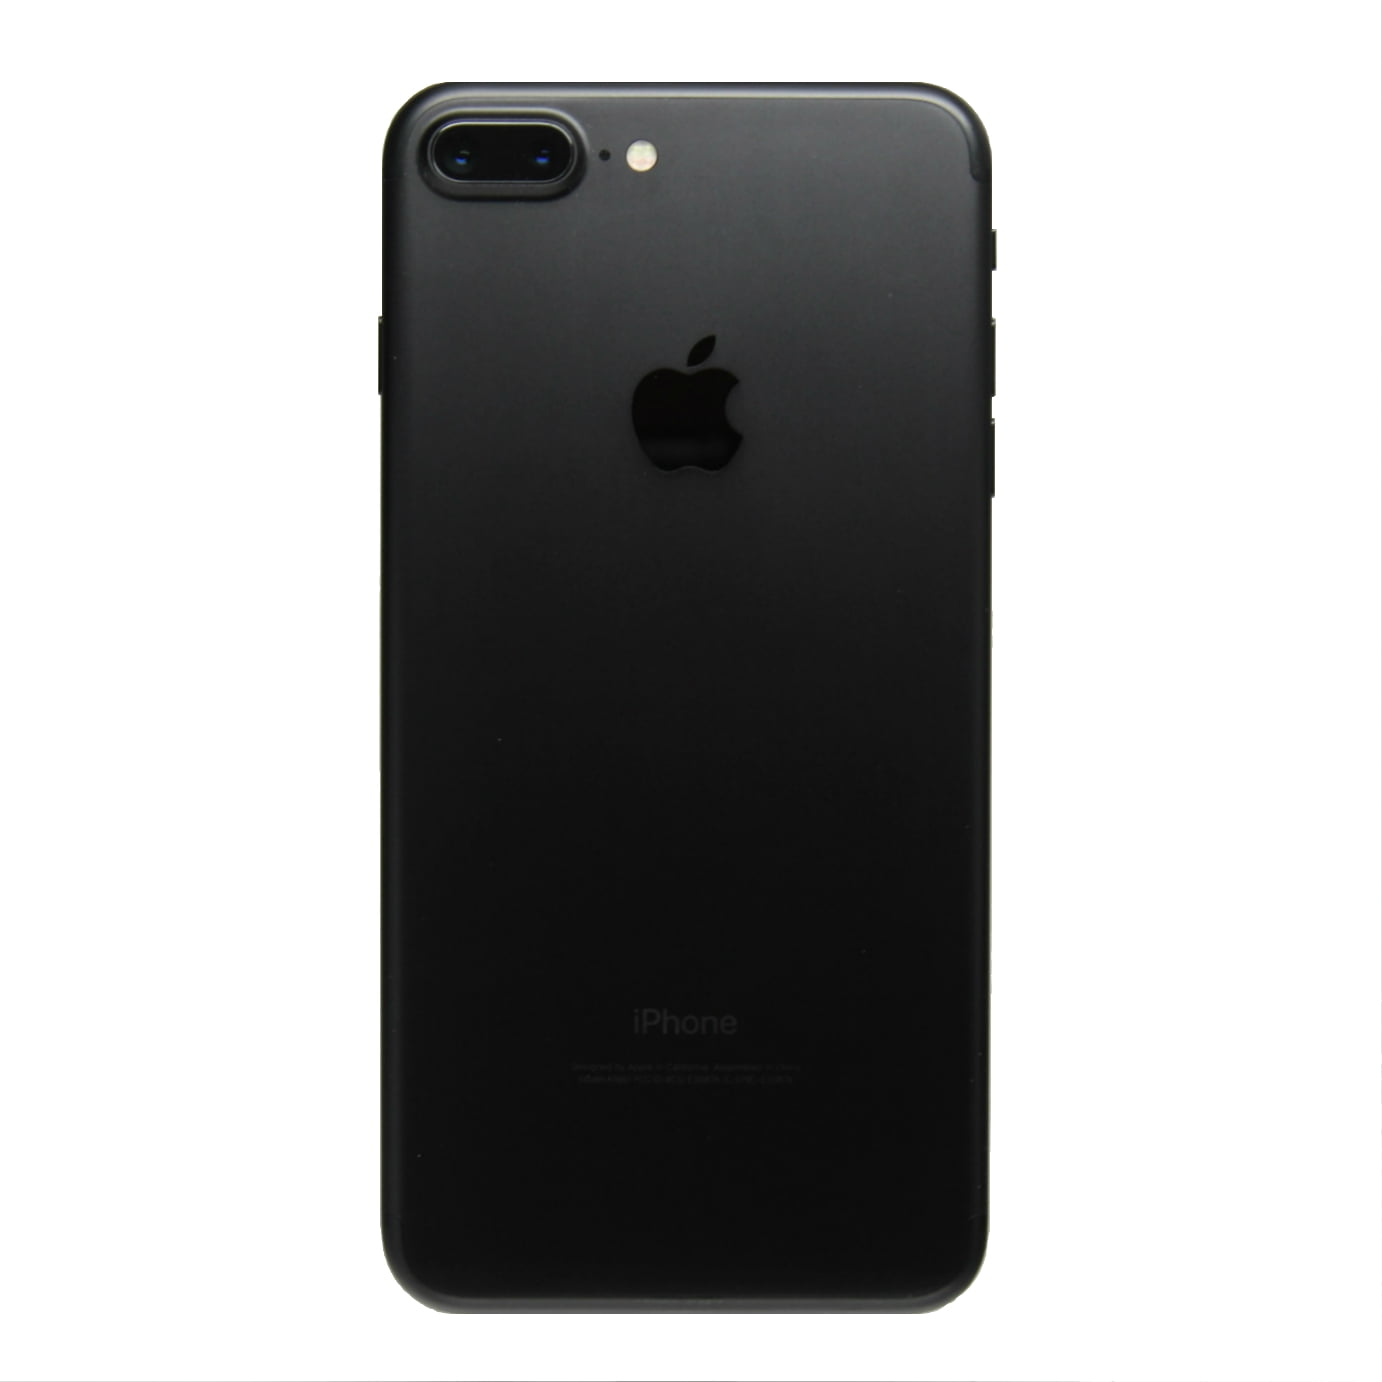 Apple iPhone 7 Plus a1661 256GB LTE CDMA/GSM Unlocked (Refurbished)